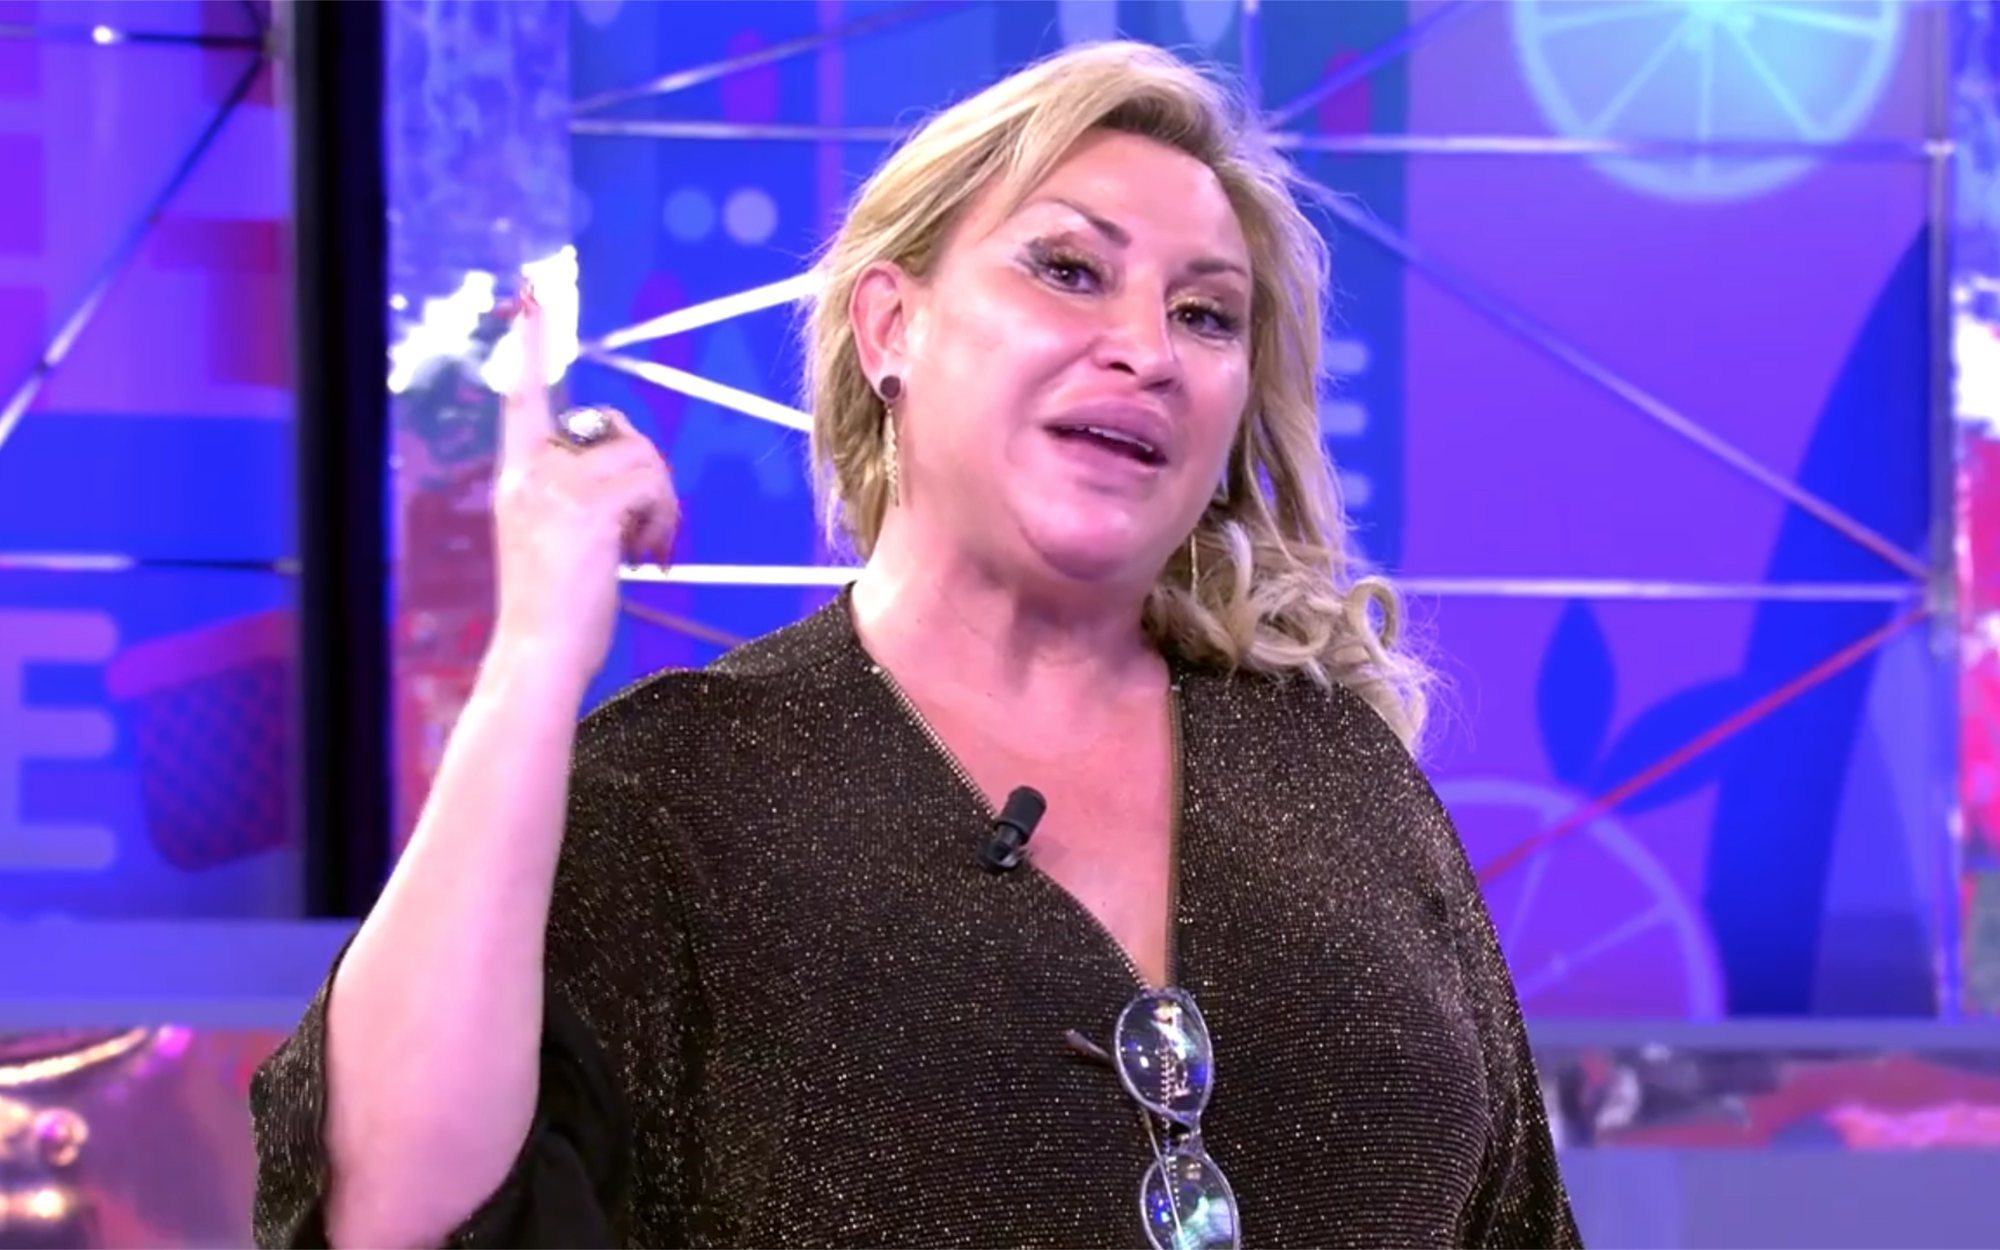 El surrealista paso de 'Sálvame' a Piqueras con Raquel Mosquera como presentadora: "Un grande del Telediario"